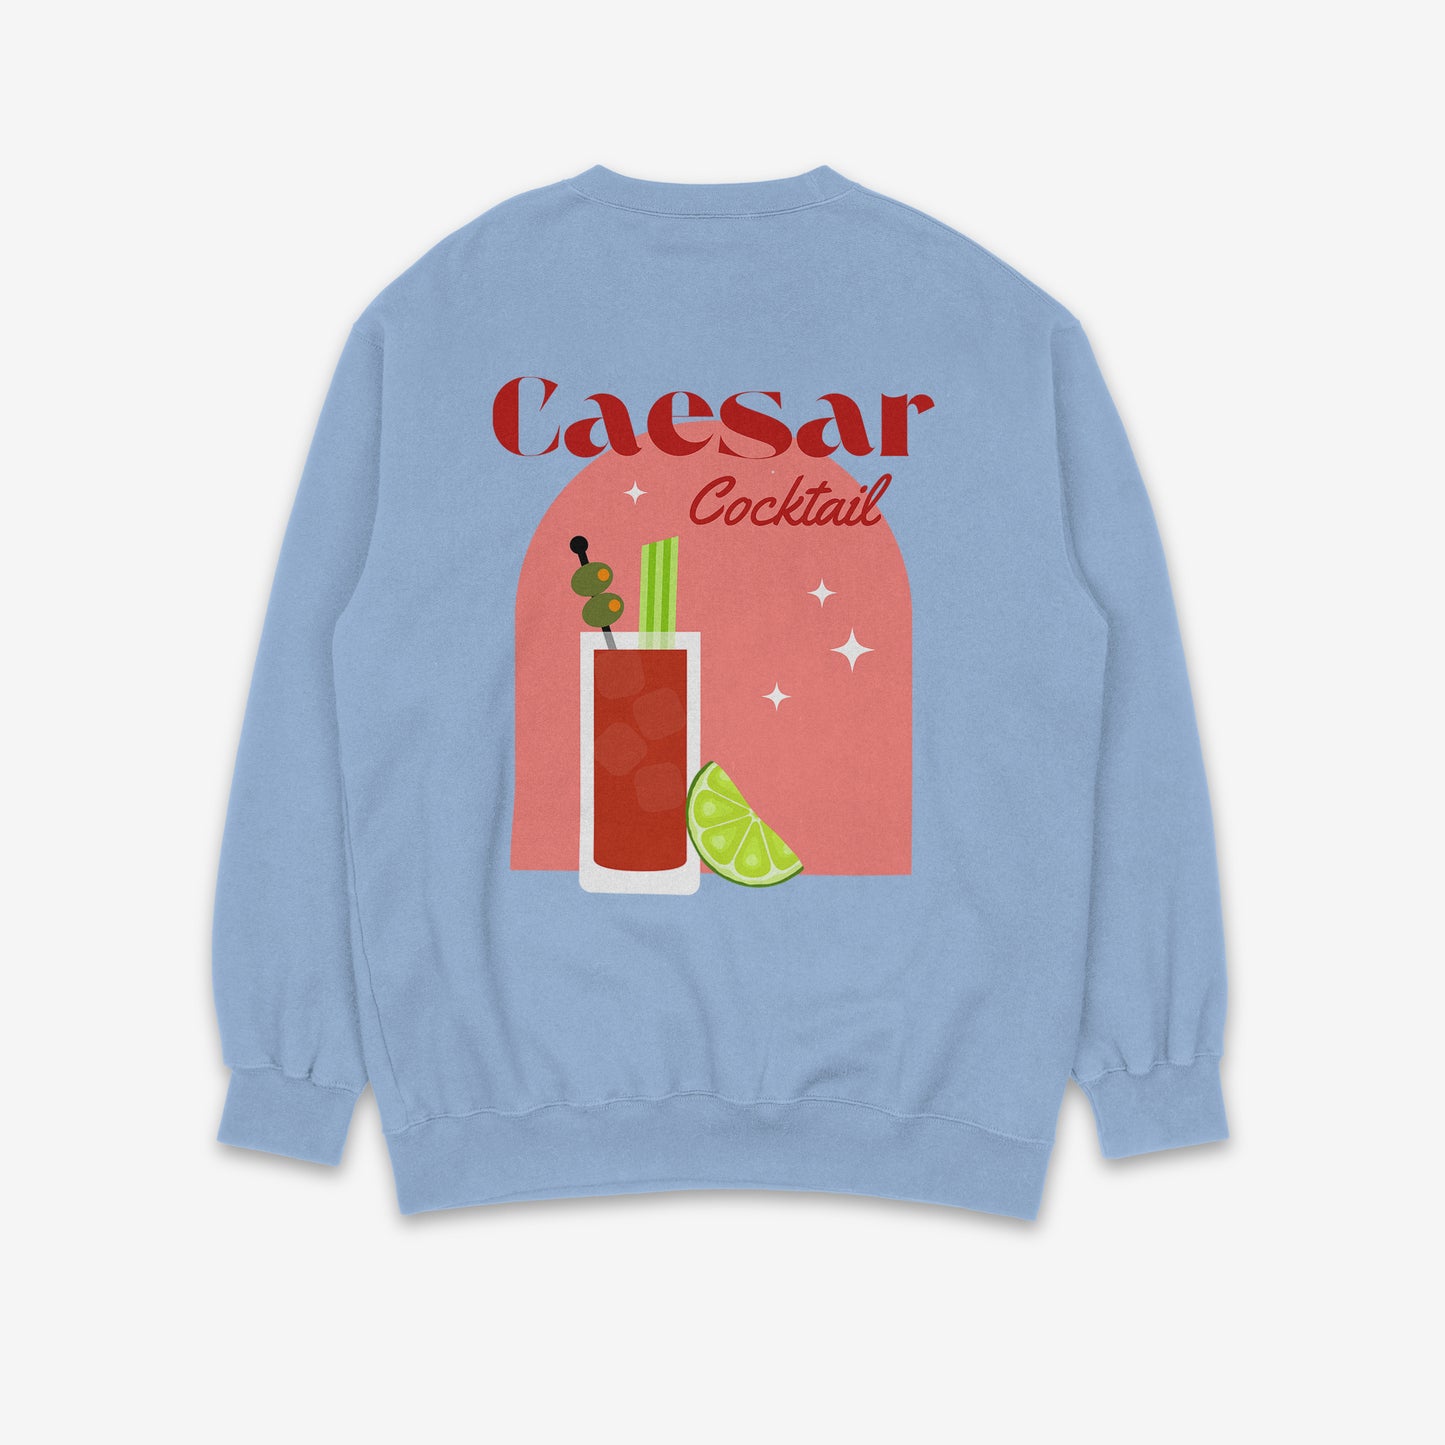 Caesar Sweatshirt